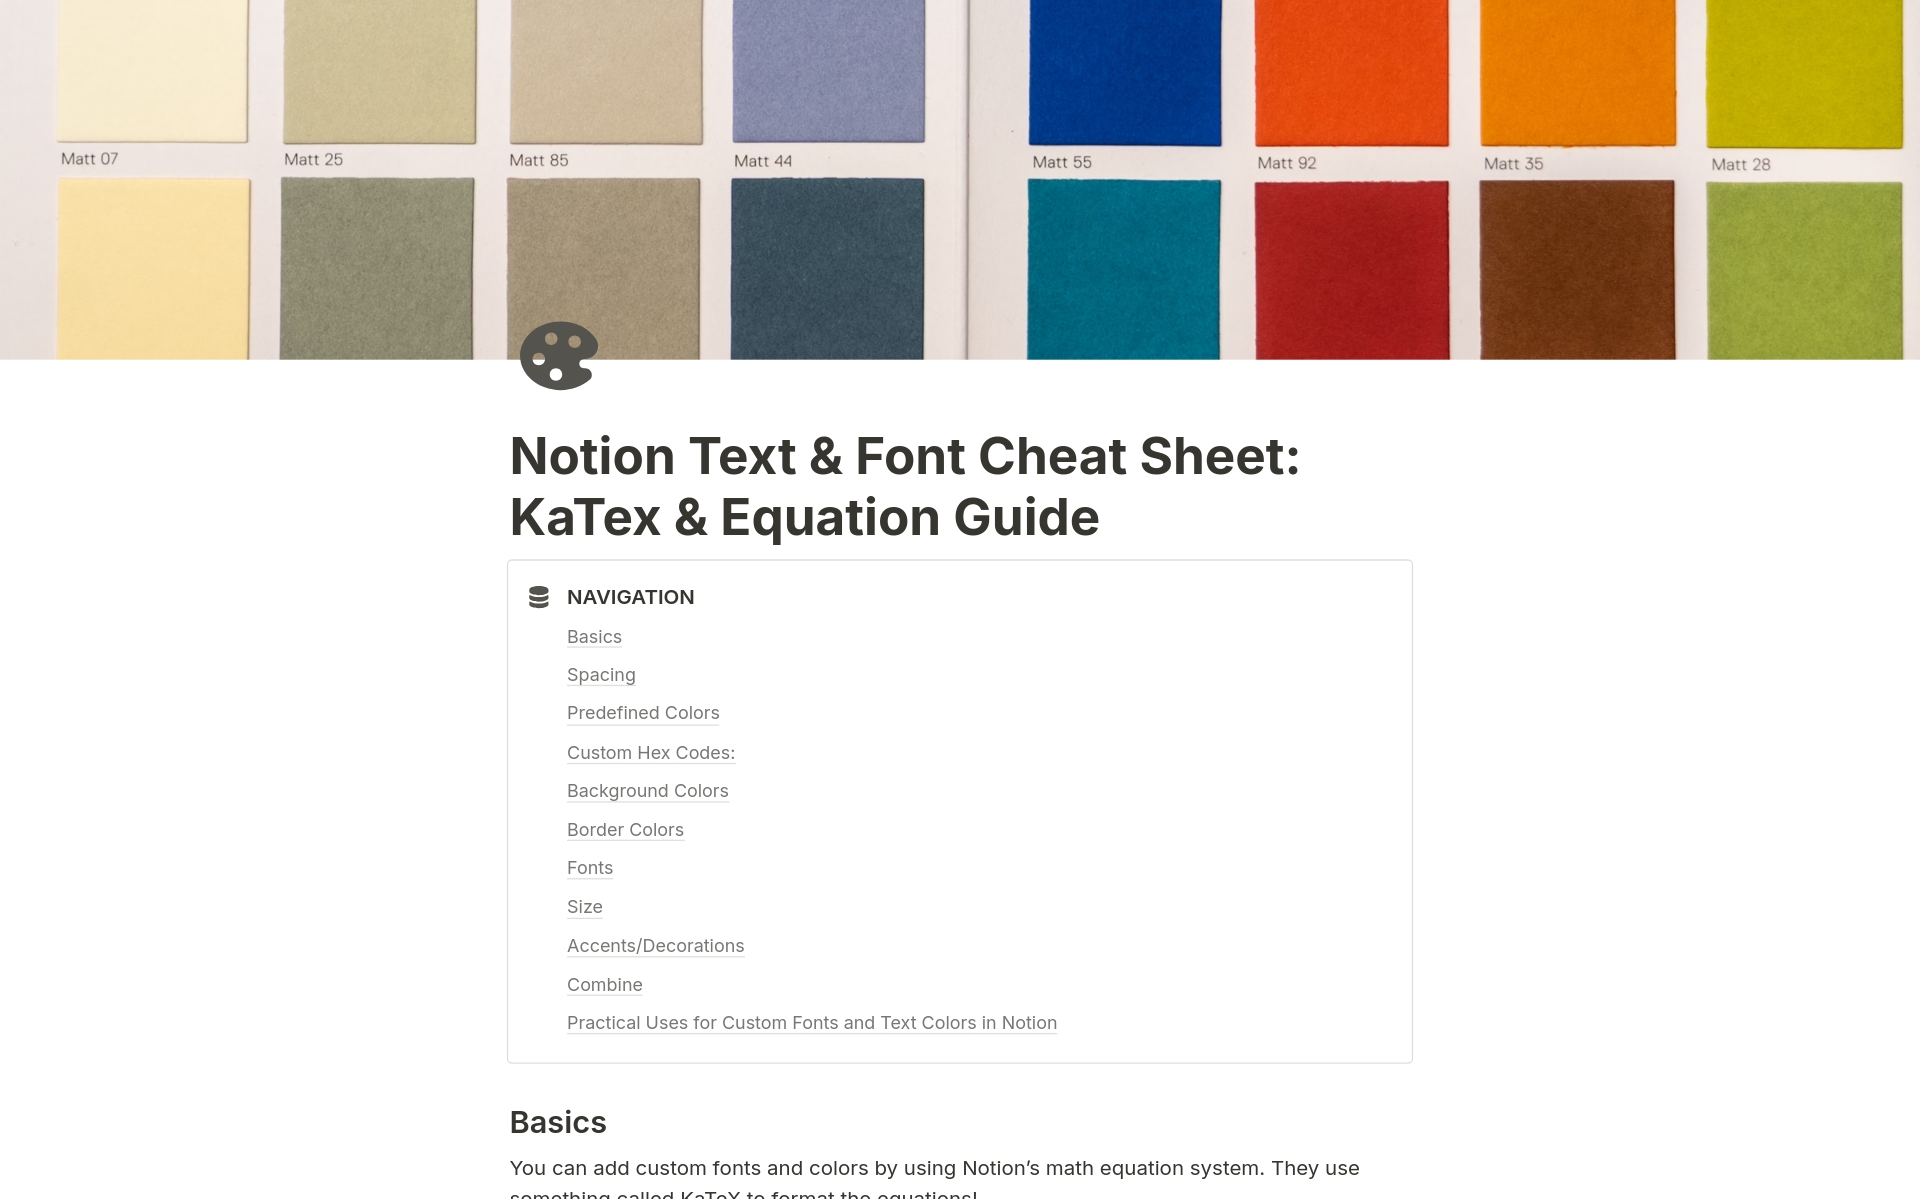 Mallin esikatselu nimelle Text & Font Cheat Sheet using KaTex